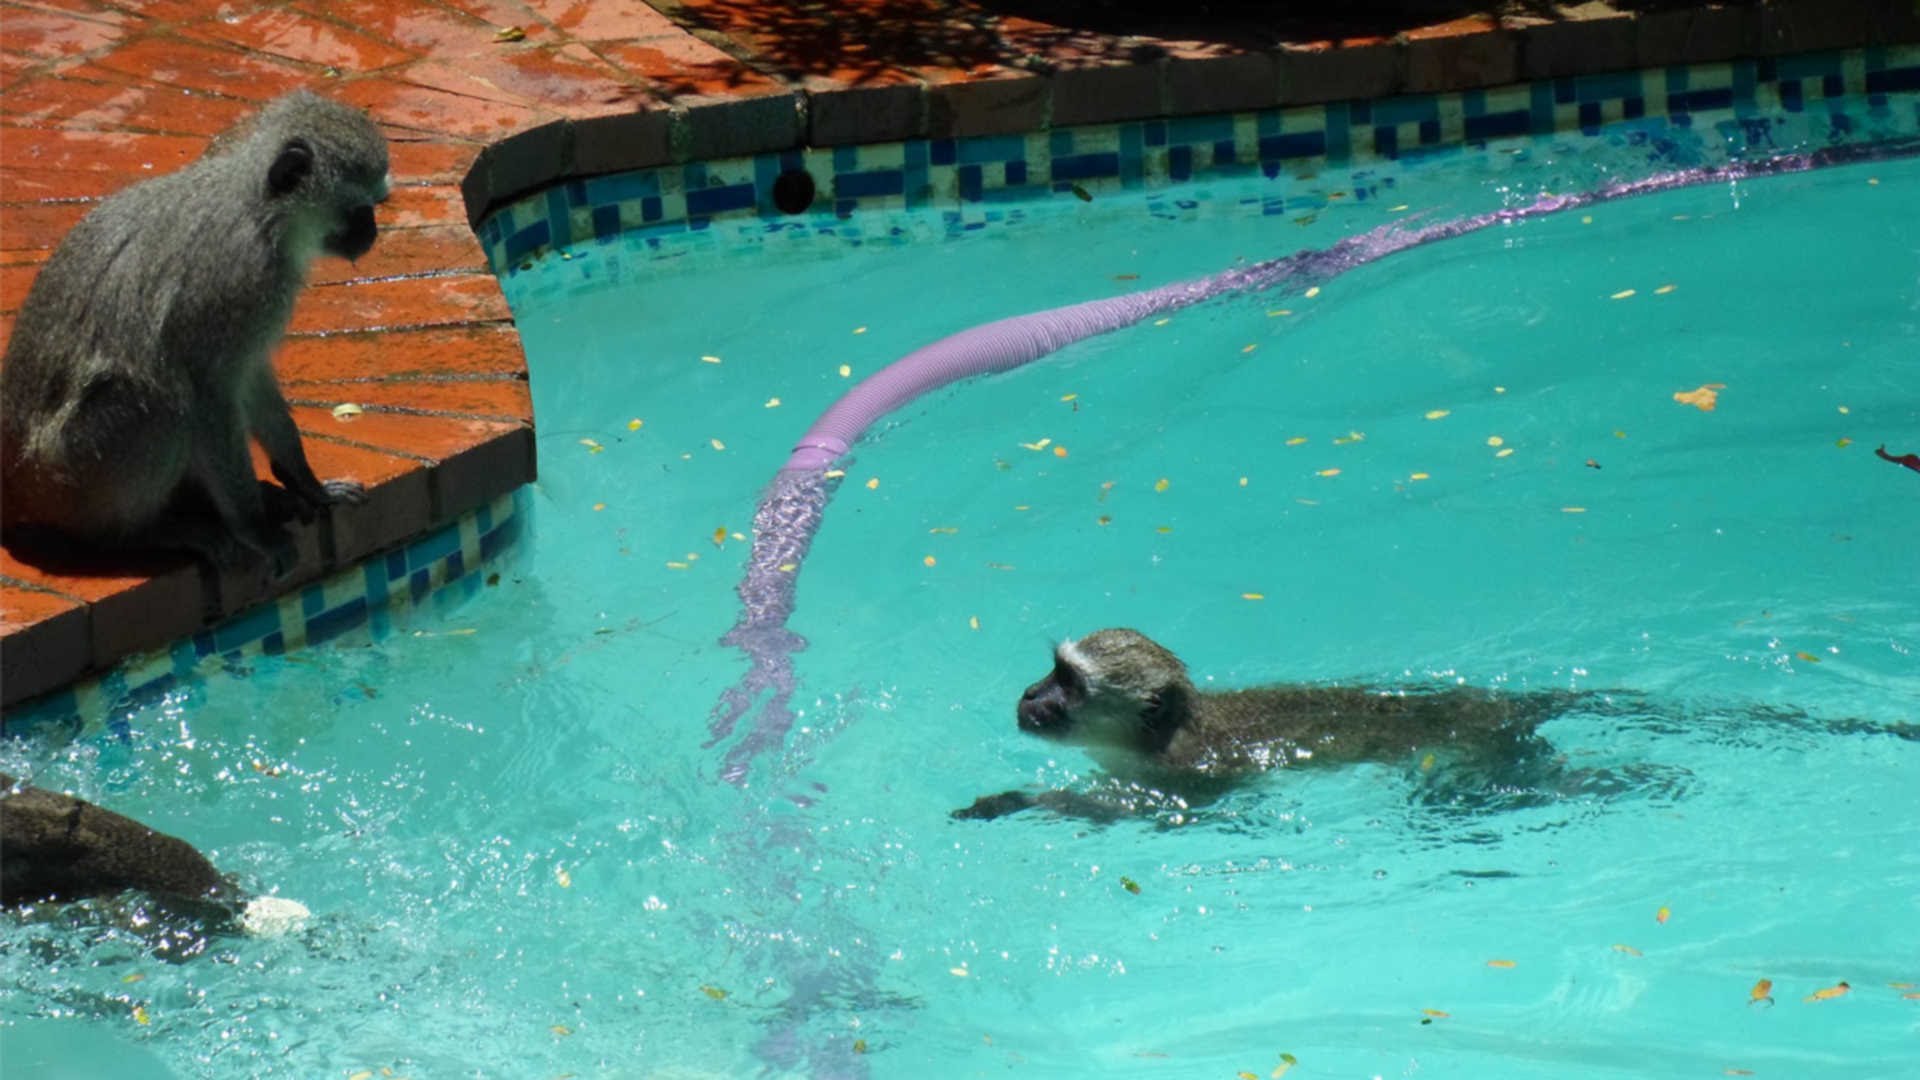 Monkeys Swimming In Backyard Pool - YouTube